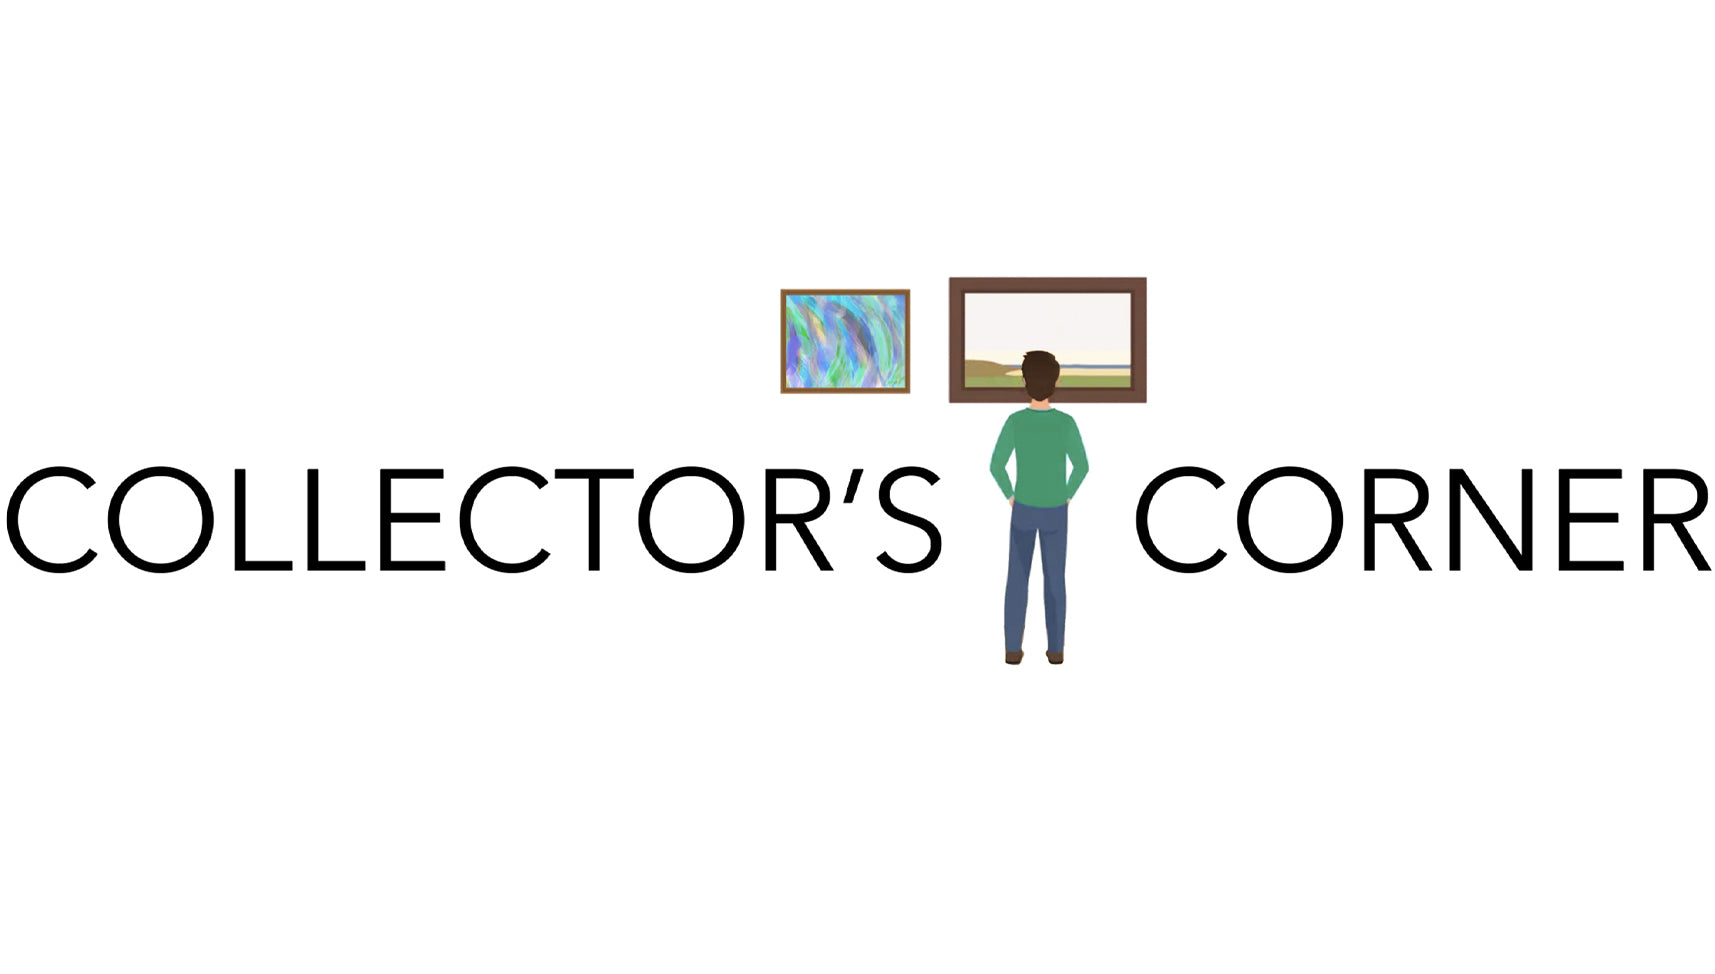 Collector's corner logo